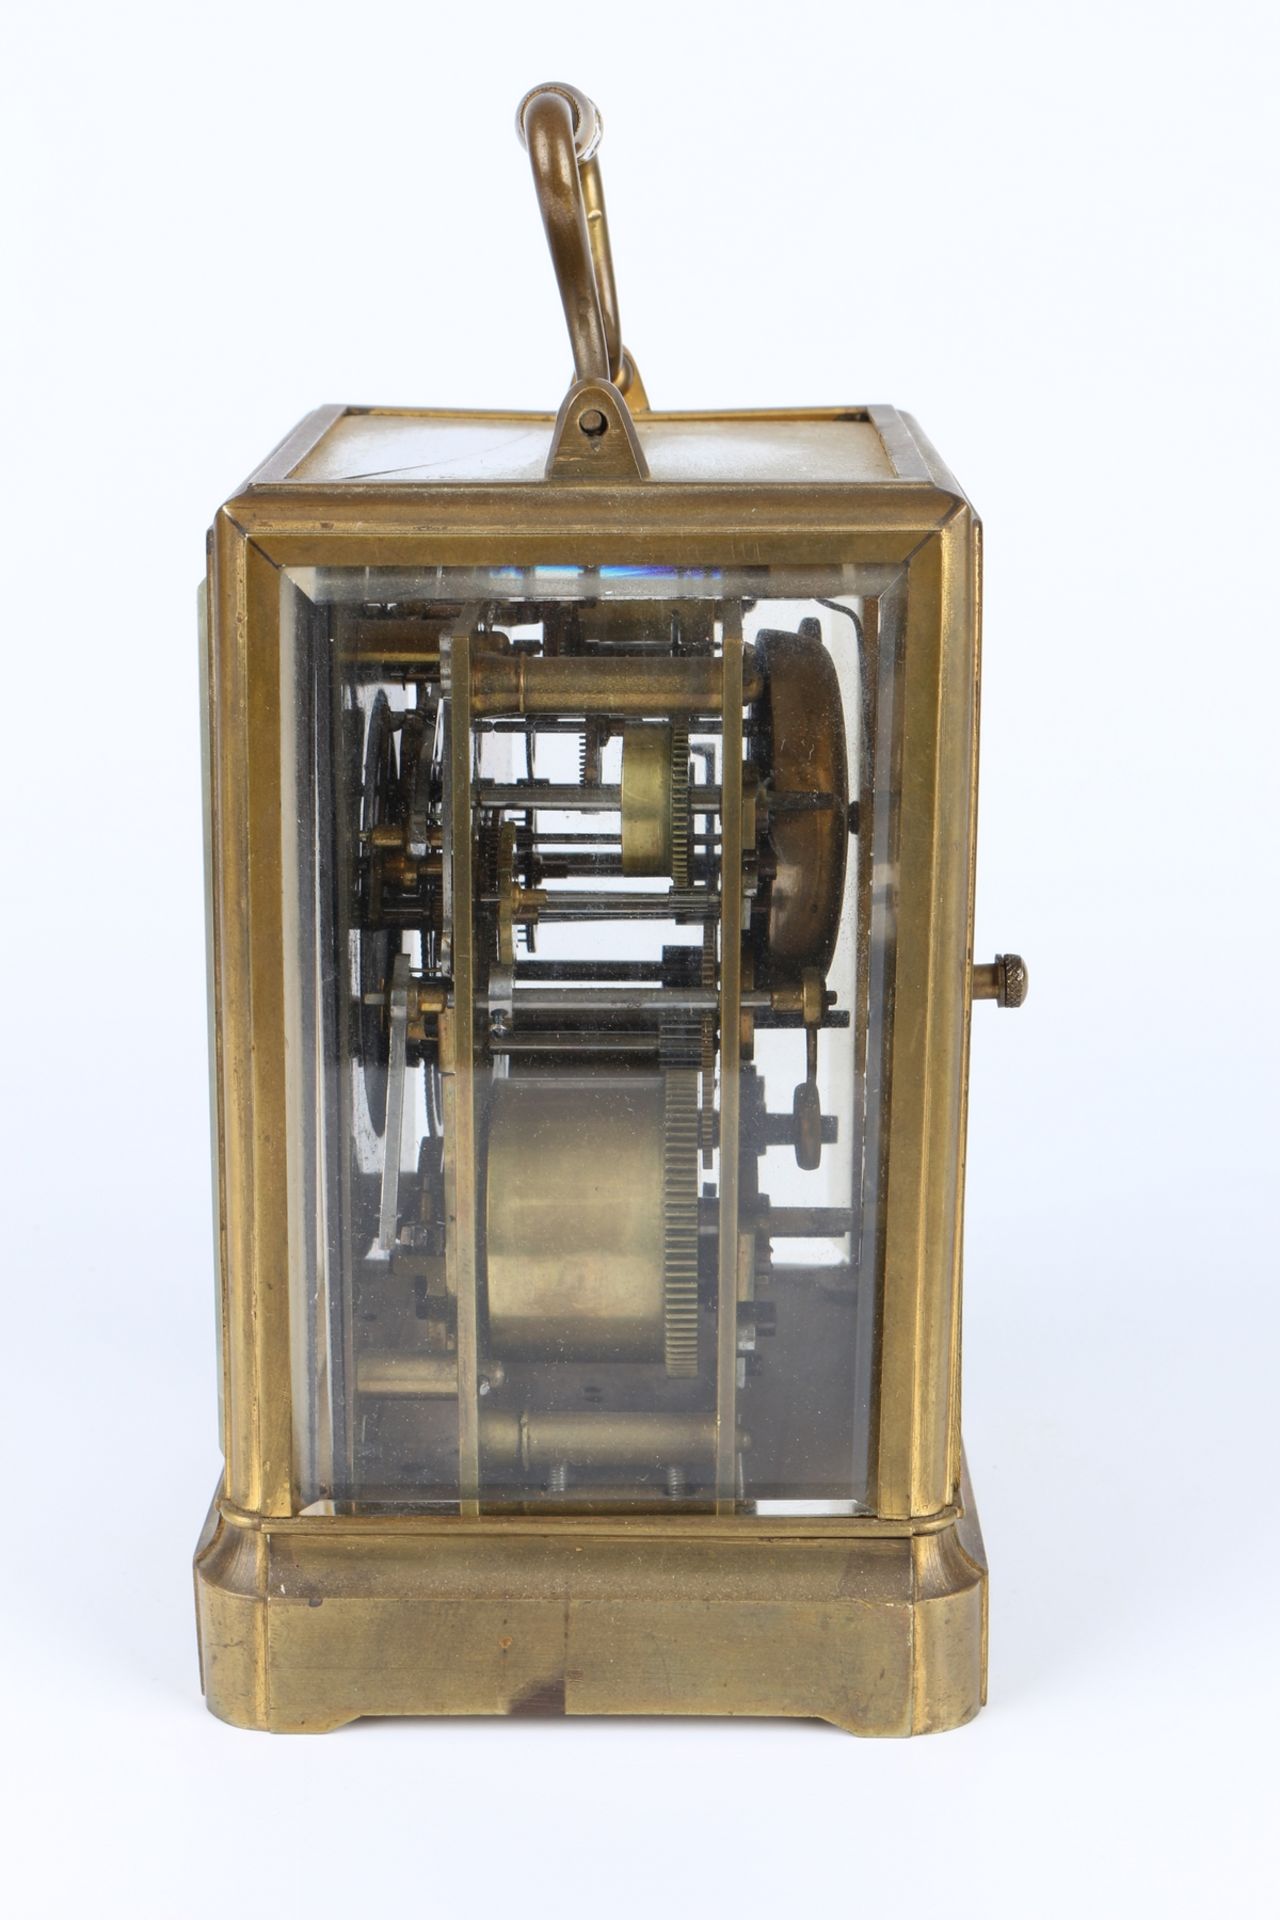 Reiseuhr Chronometer Japy Freres & Cie, french carriage clock, - Image 3 of 5